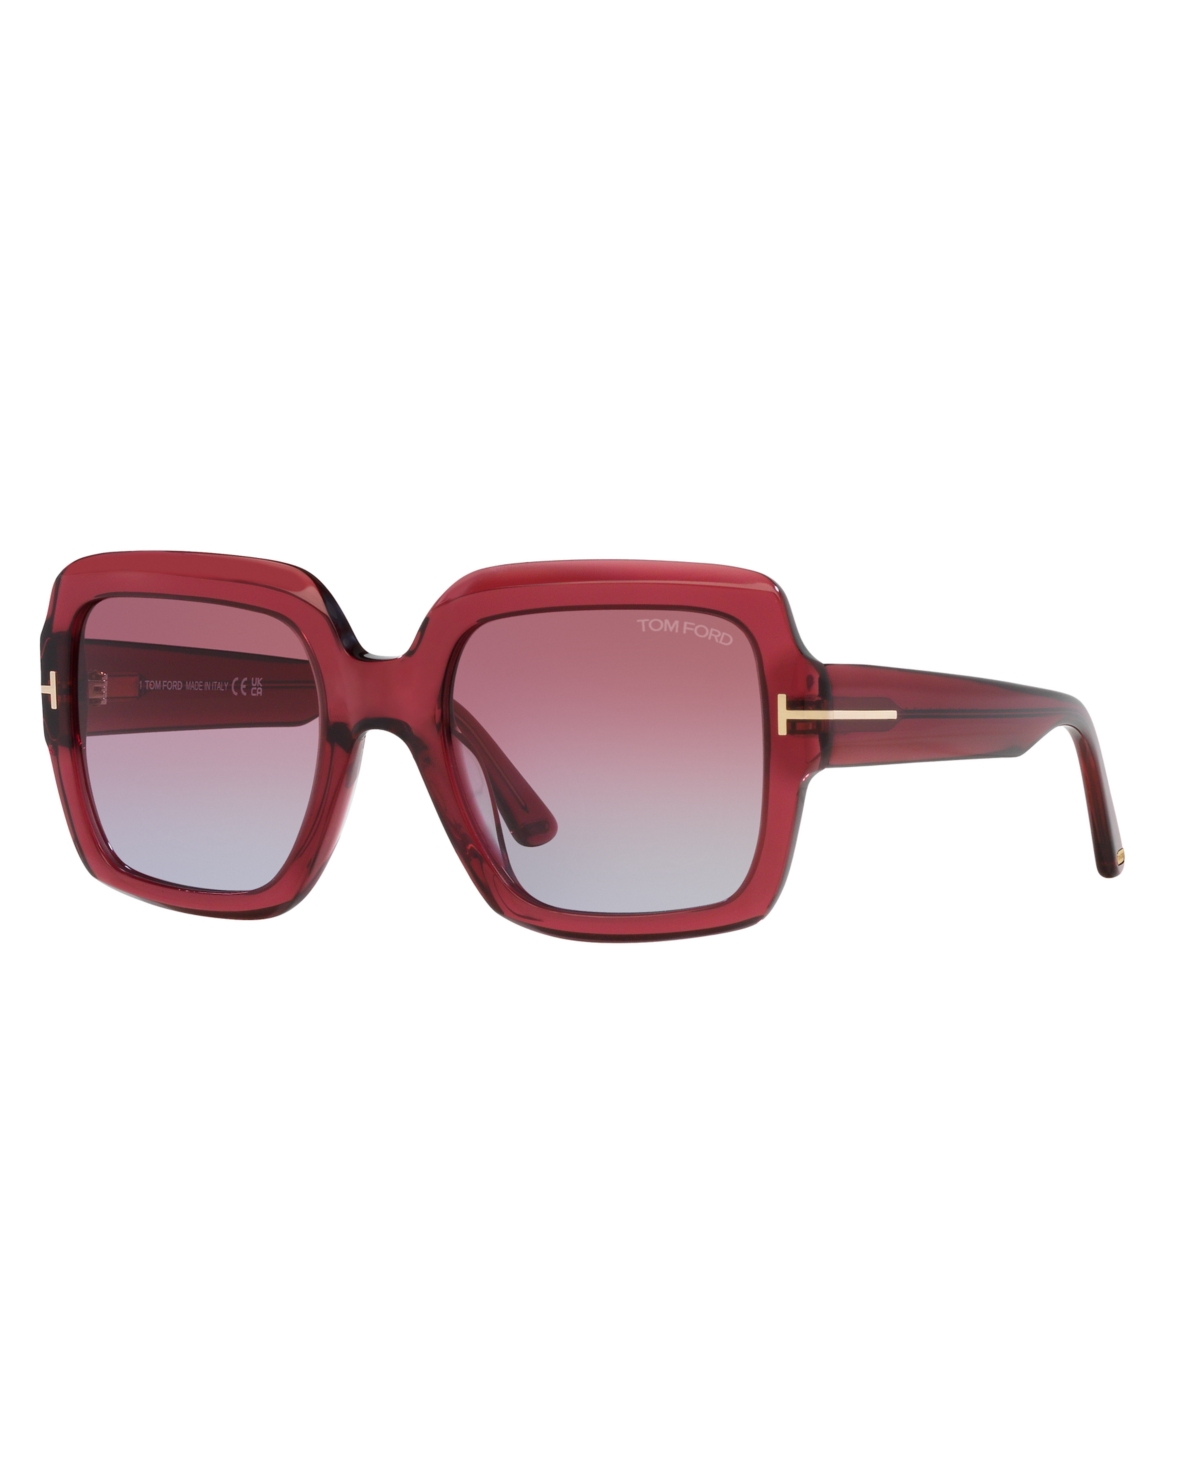 Tom Ford Women's Sunglasses, Kaya In Red